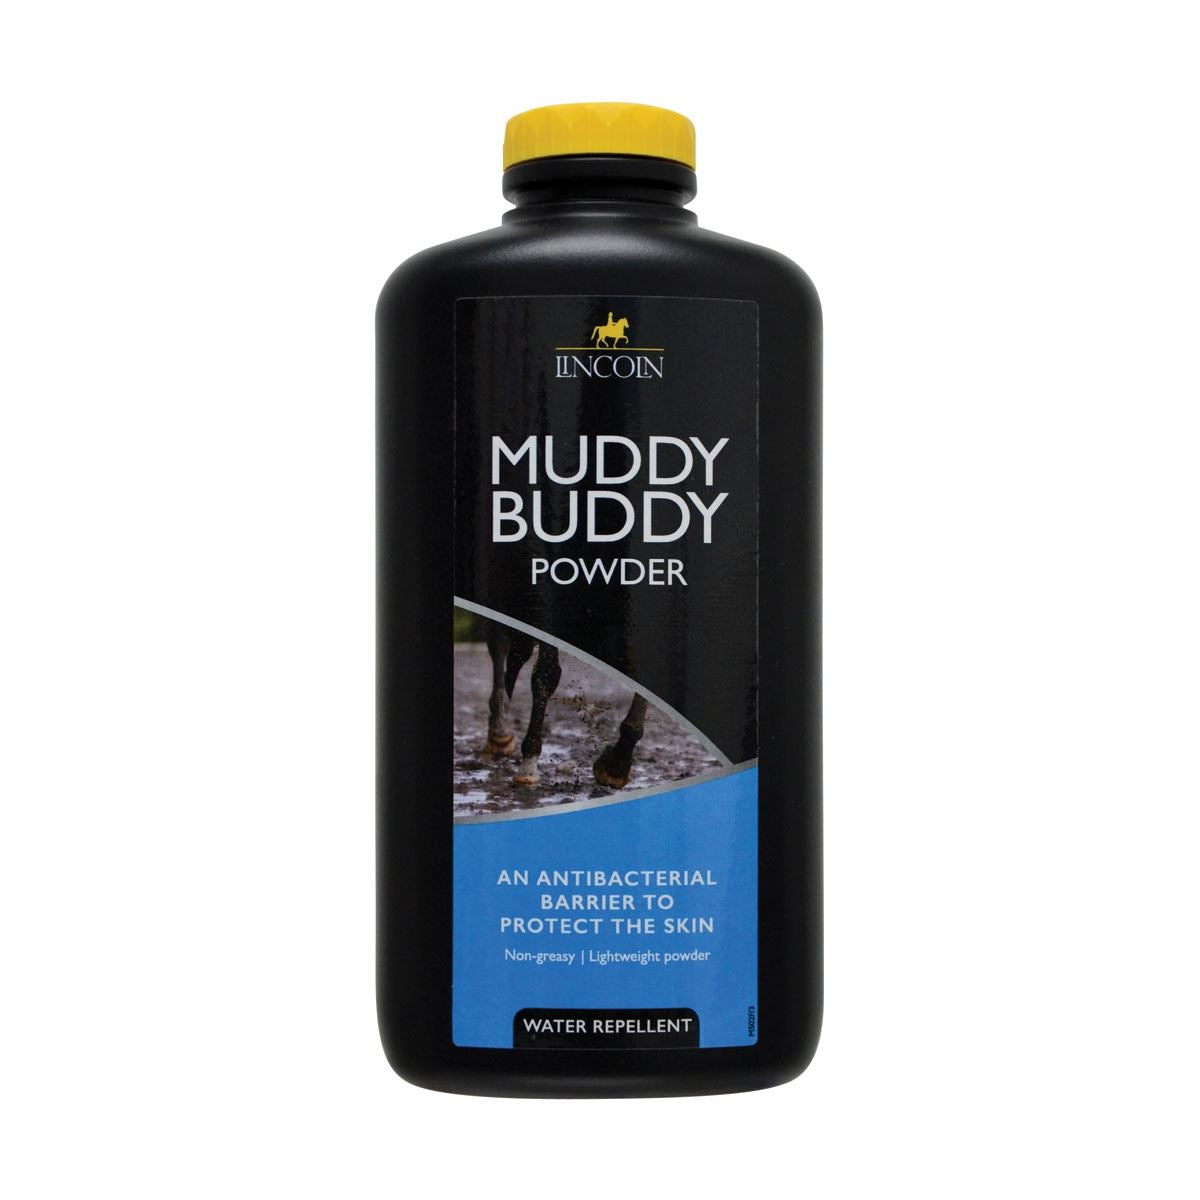 Lincoln Muddy Buddy Powder - Just Horse Riders